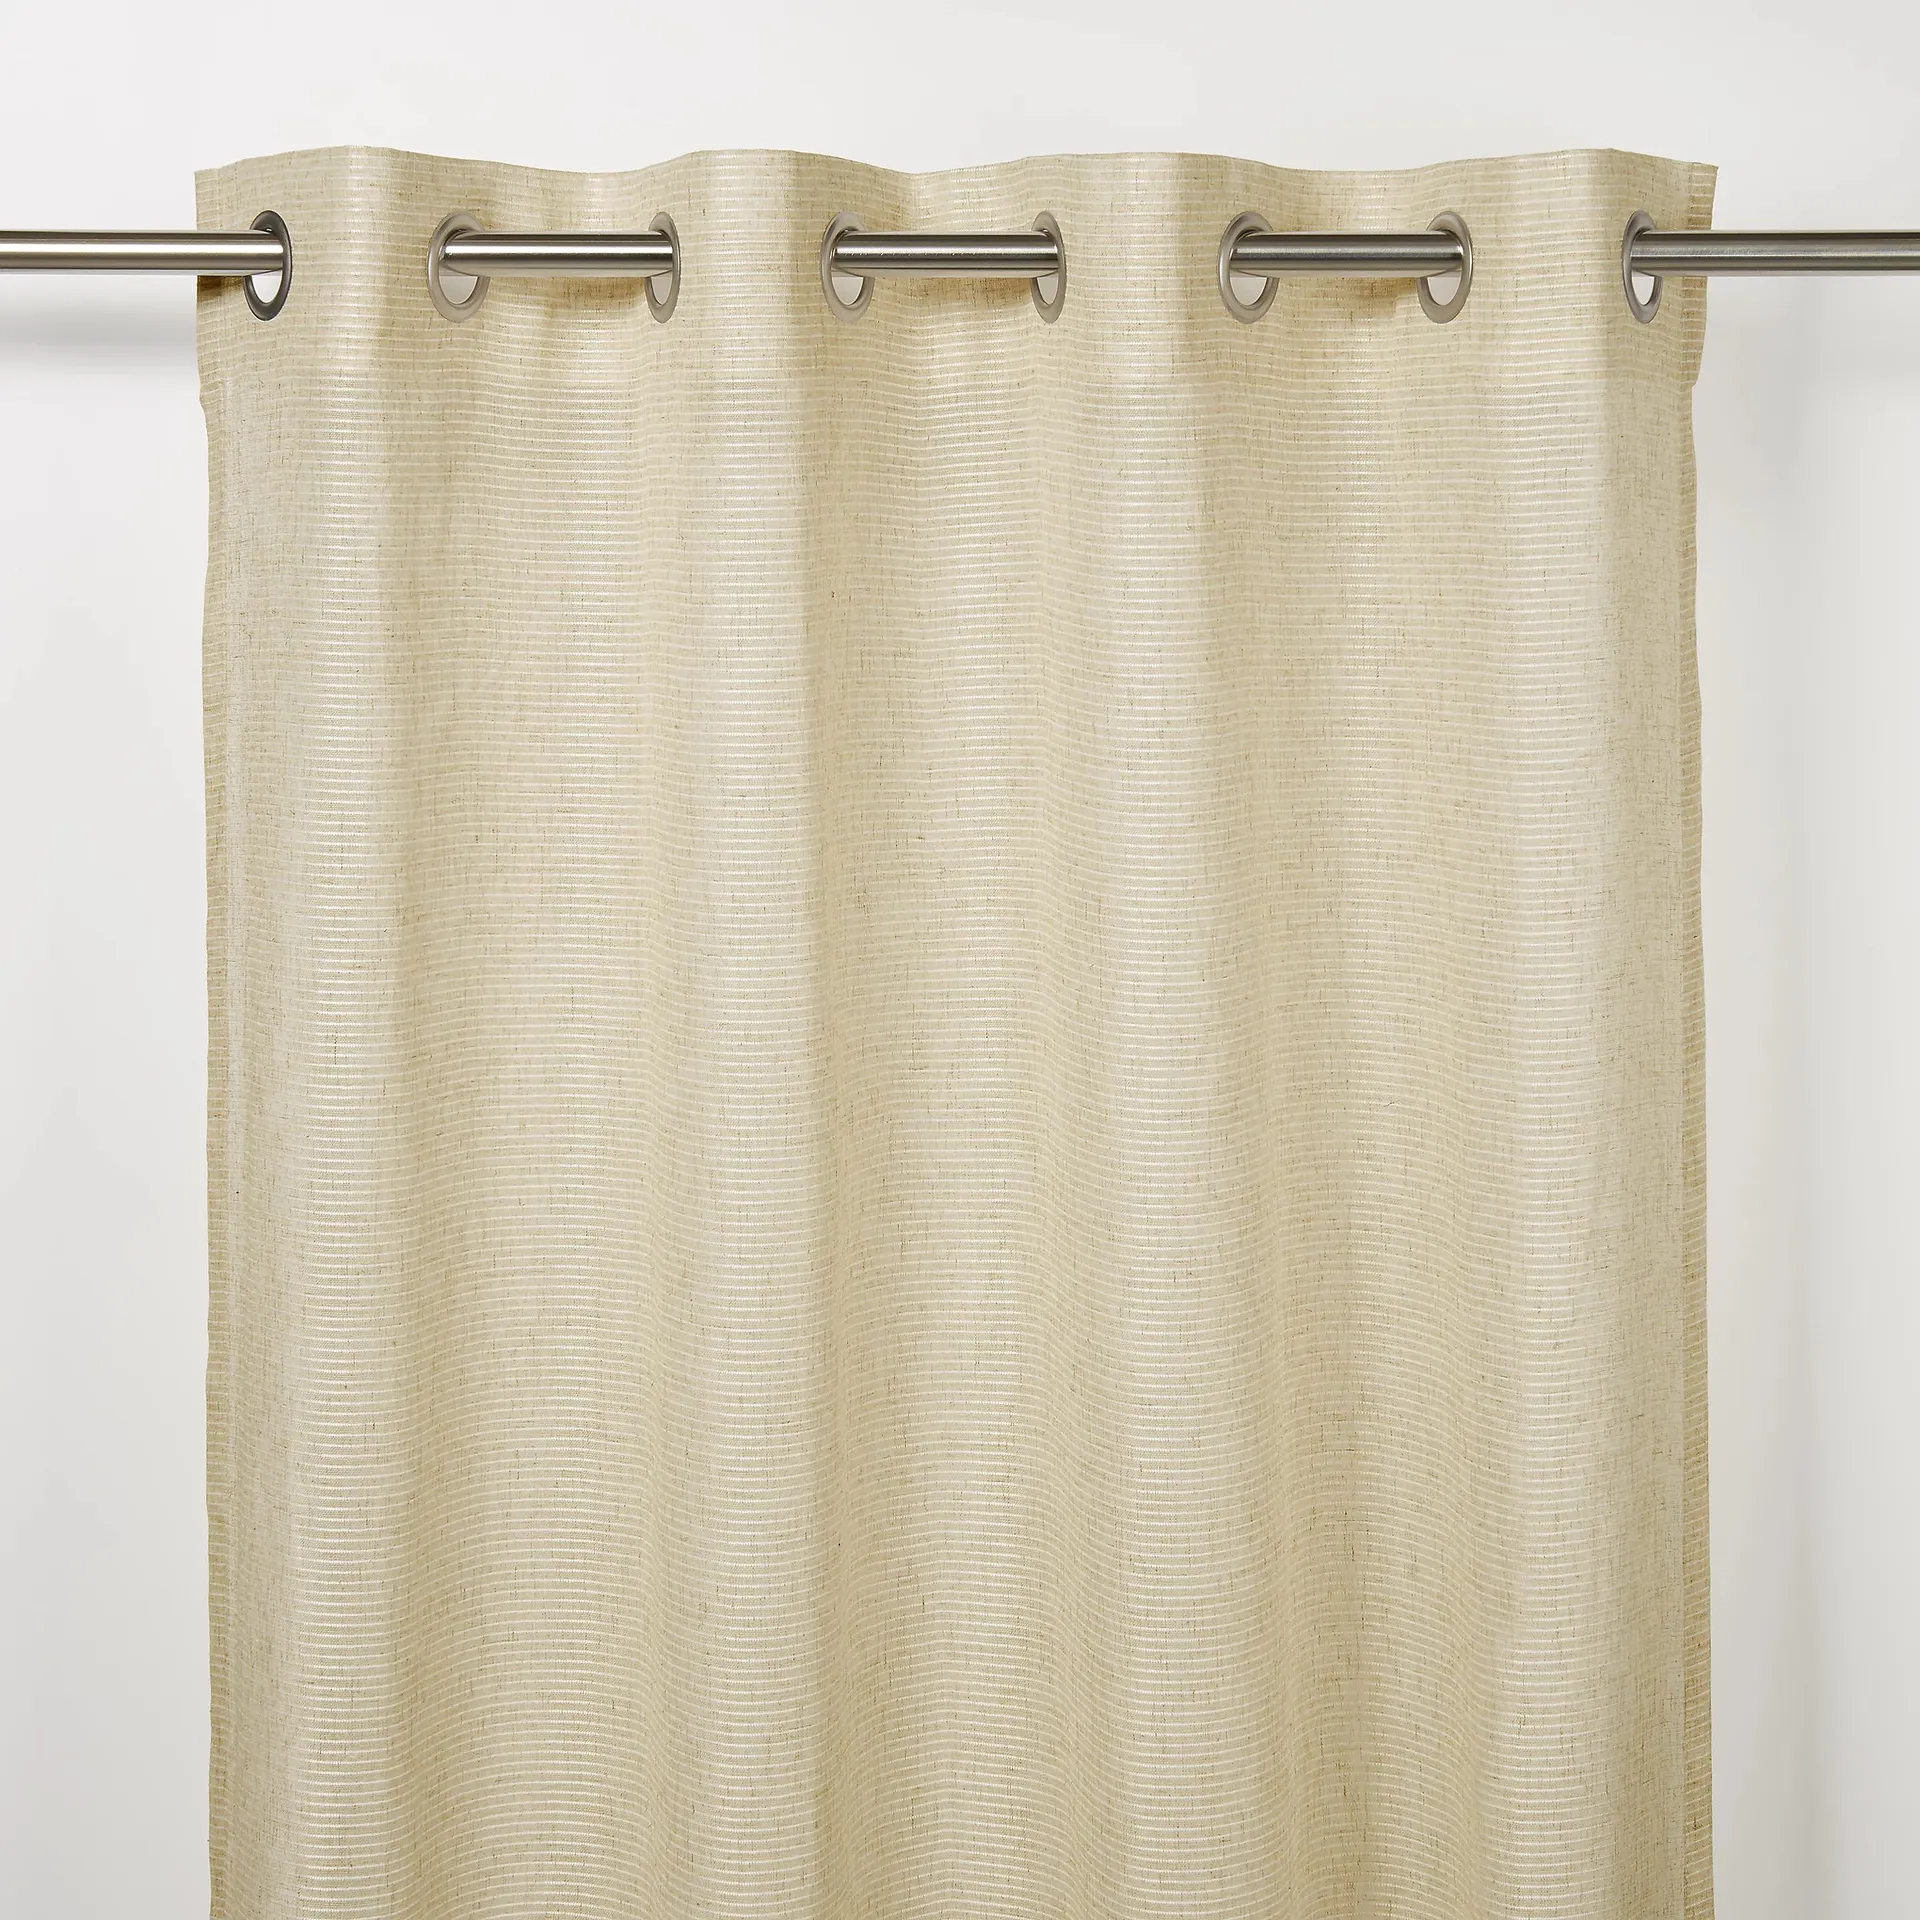 Fola Beige Horizontal stripe Unlined Eyelet Voile curtain (W)140cm (L)260cm, Single